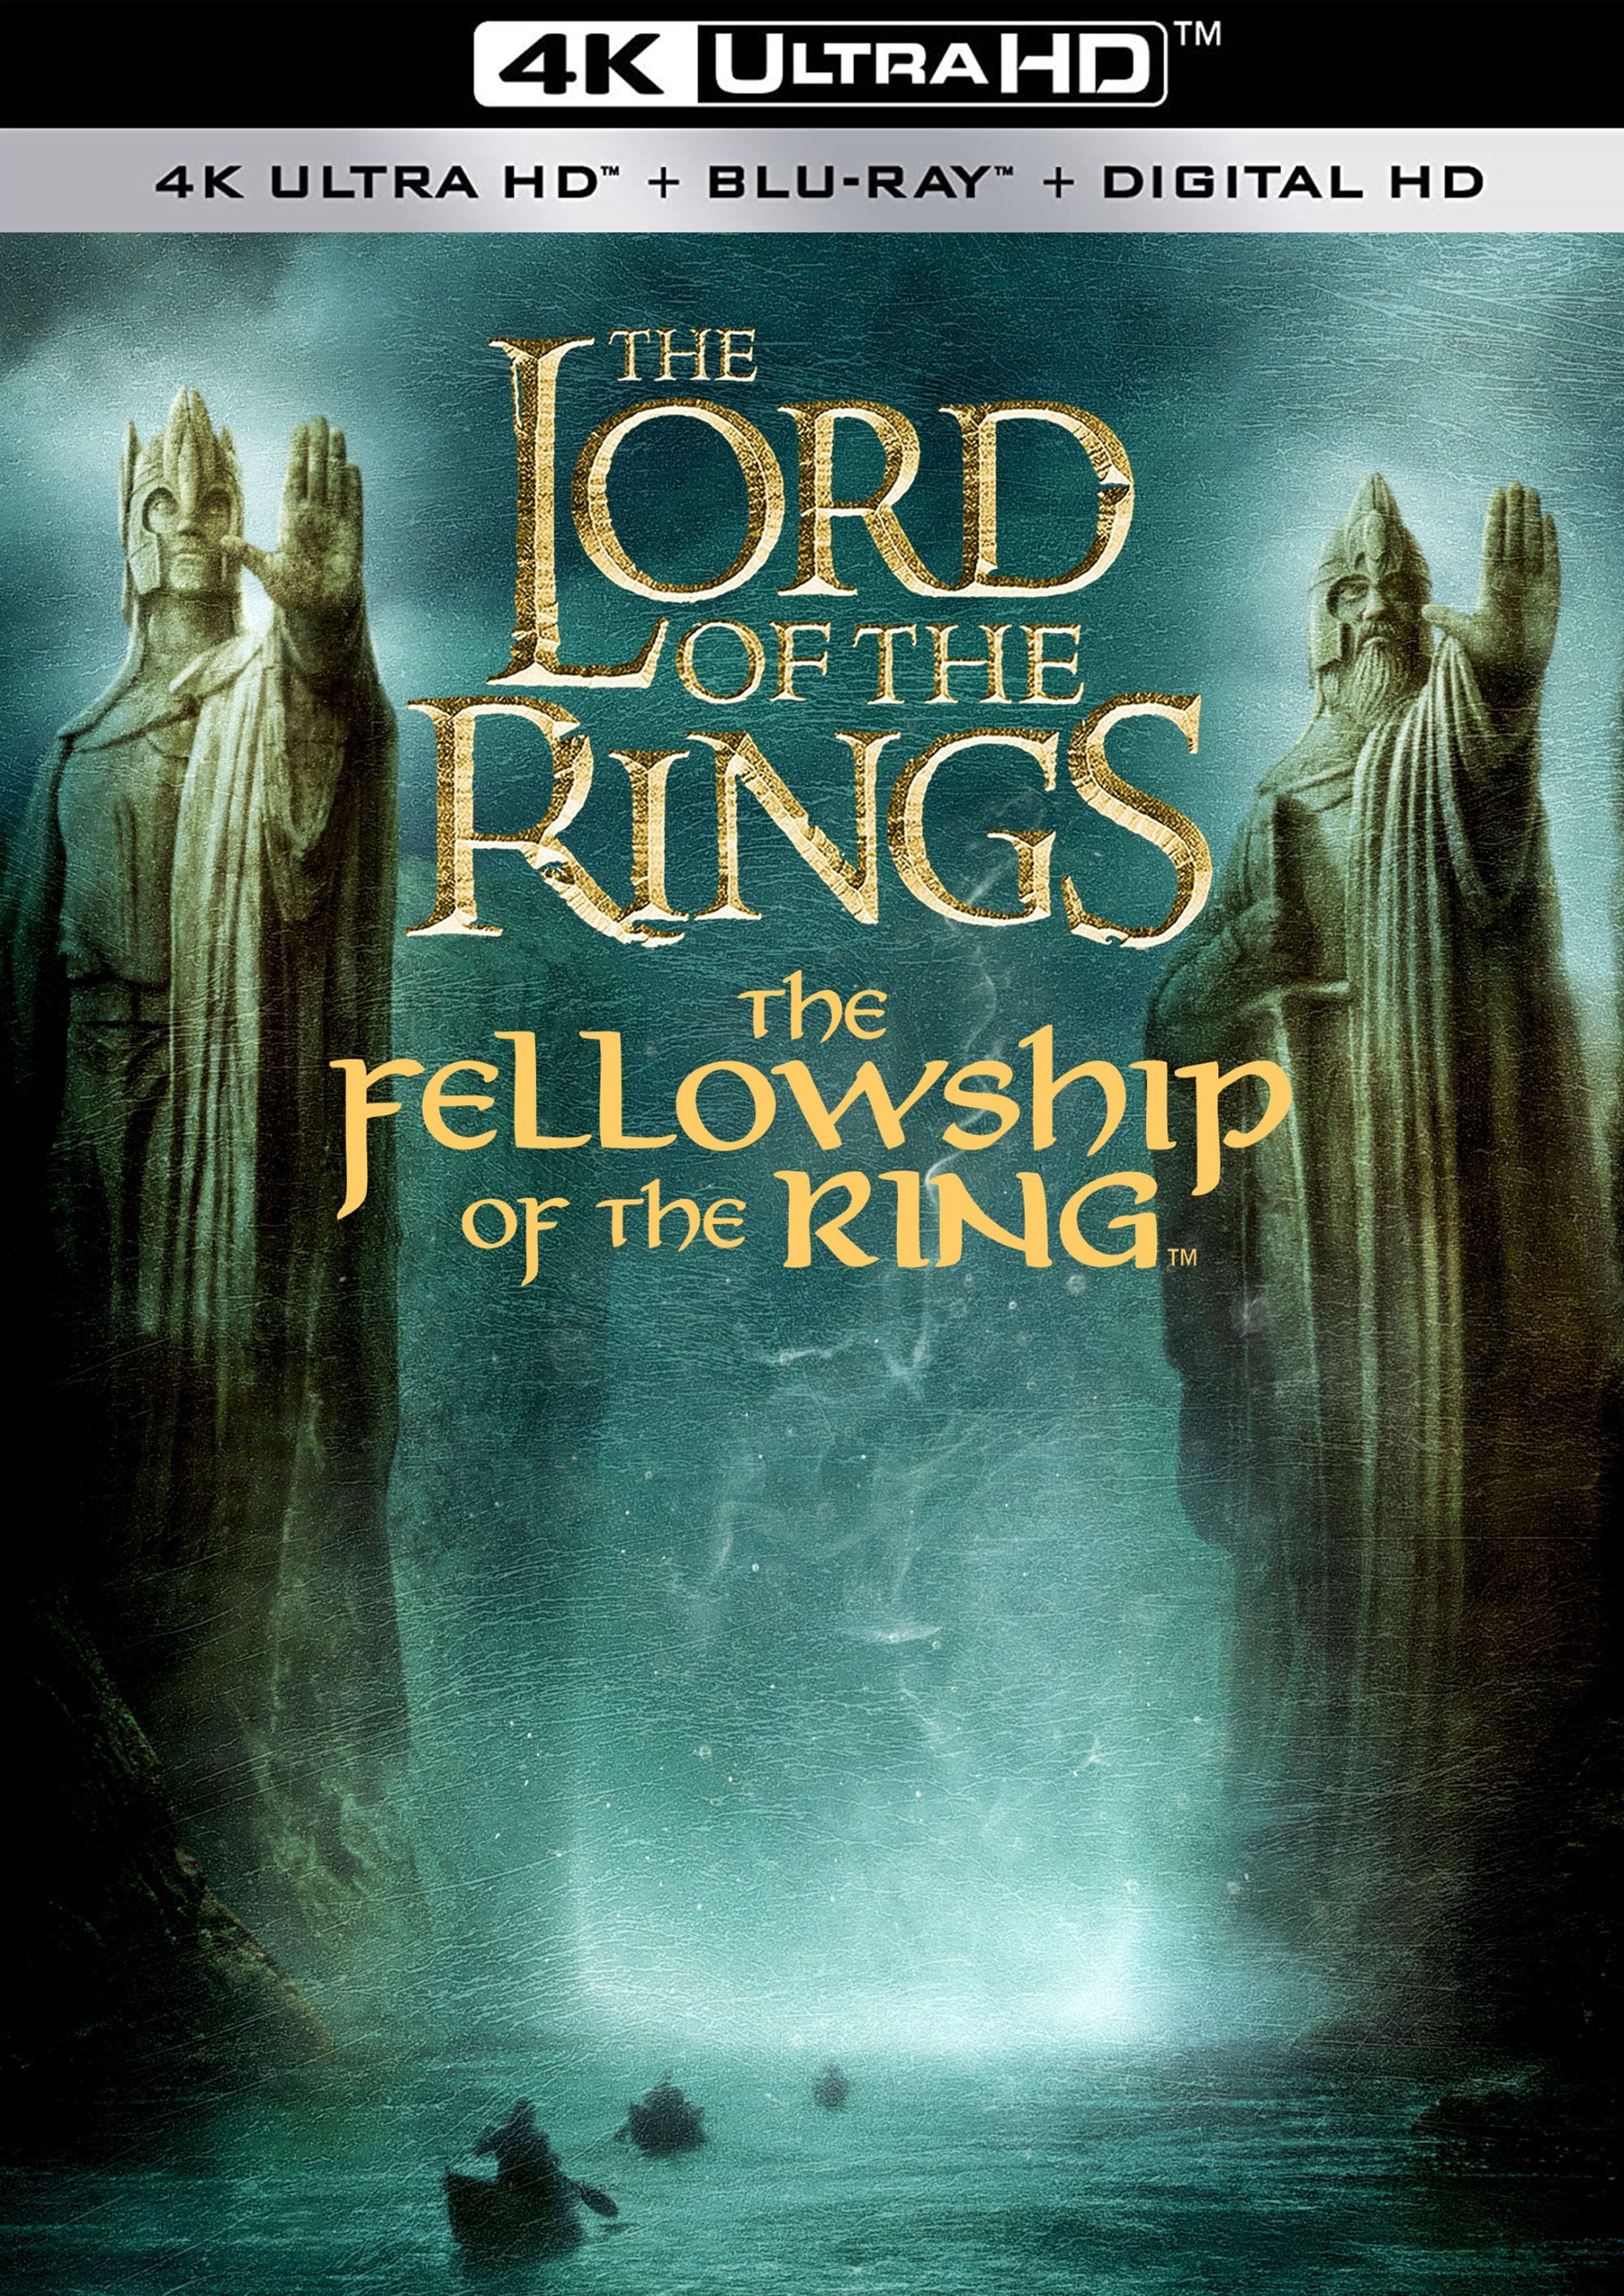 Stiahni si UHD Filmy Pan prstenu: Spolocenstvo Prstenu / The Lord of the Rings: The Fellowship of the Ring - EXTENDED (2001)(CZ/EN)(2160p 4K BRRip) = CSFD 90%